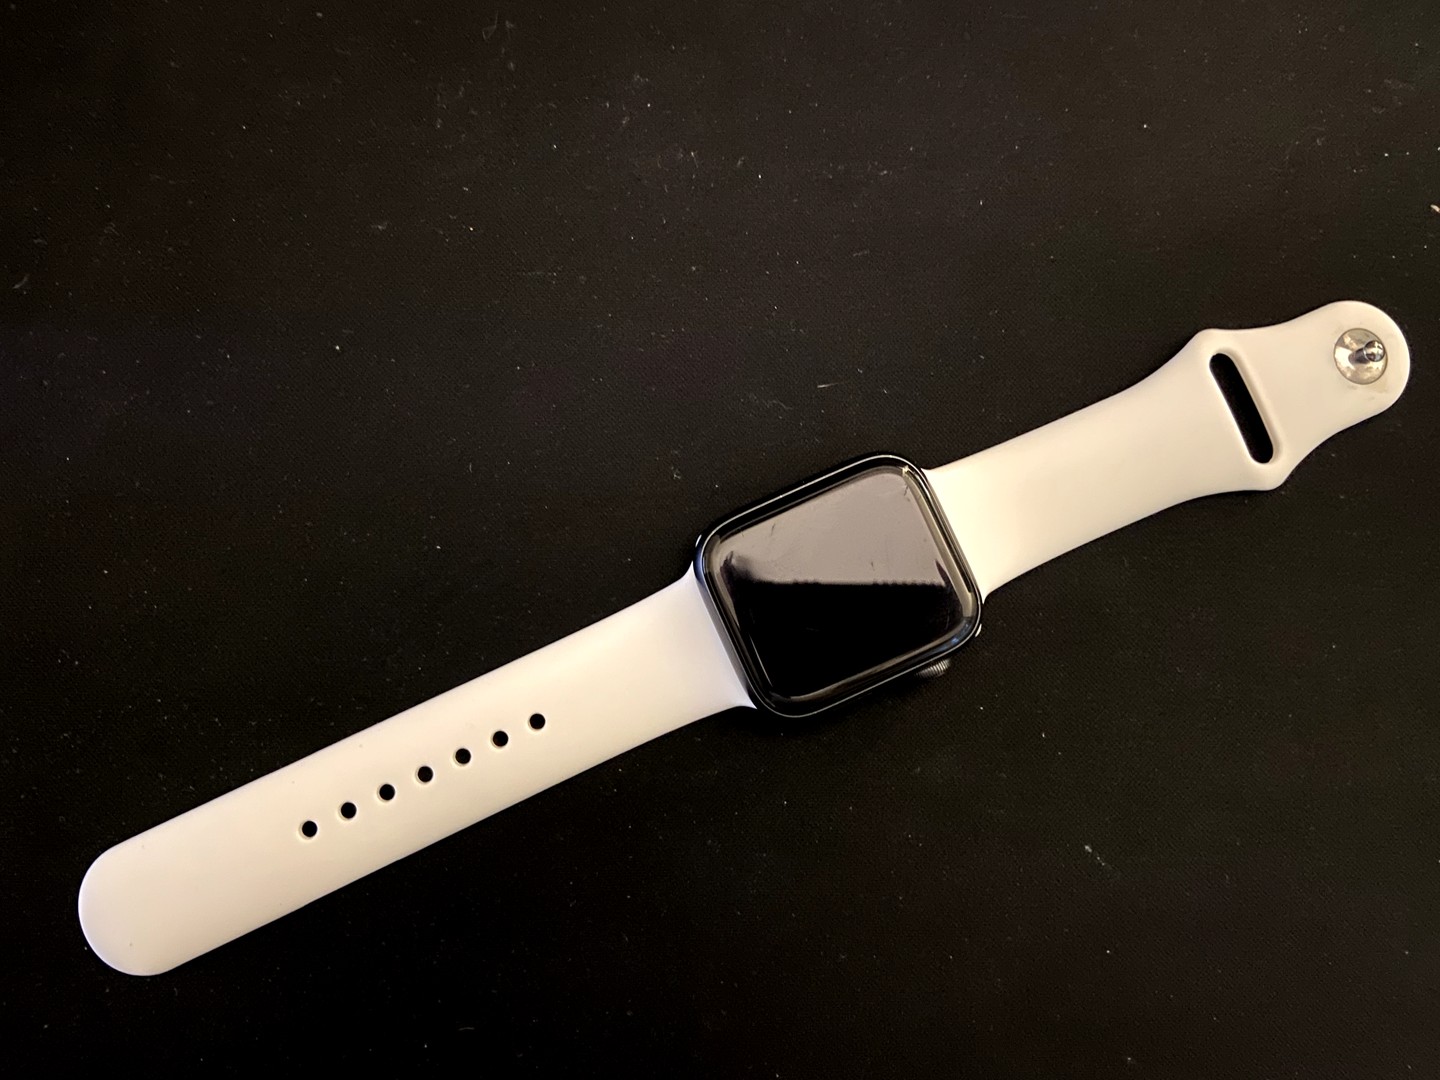 accesorios para electronica - Apple watch series 5 con Icloud lock